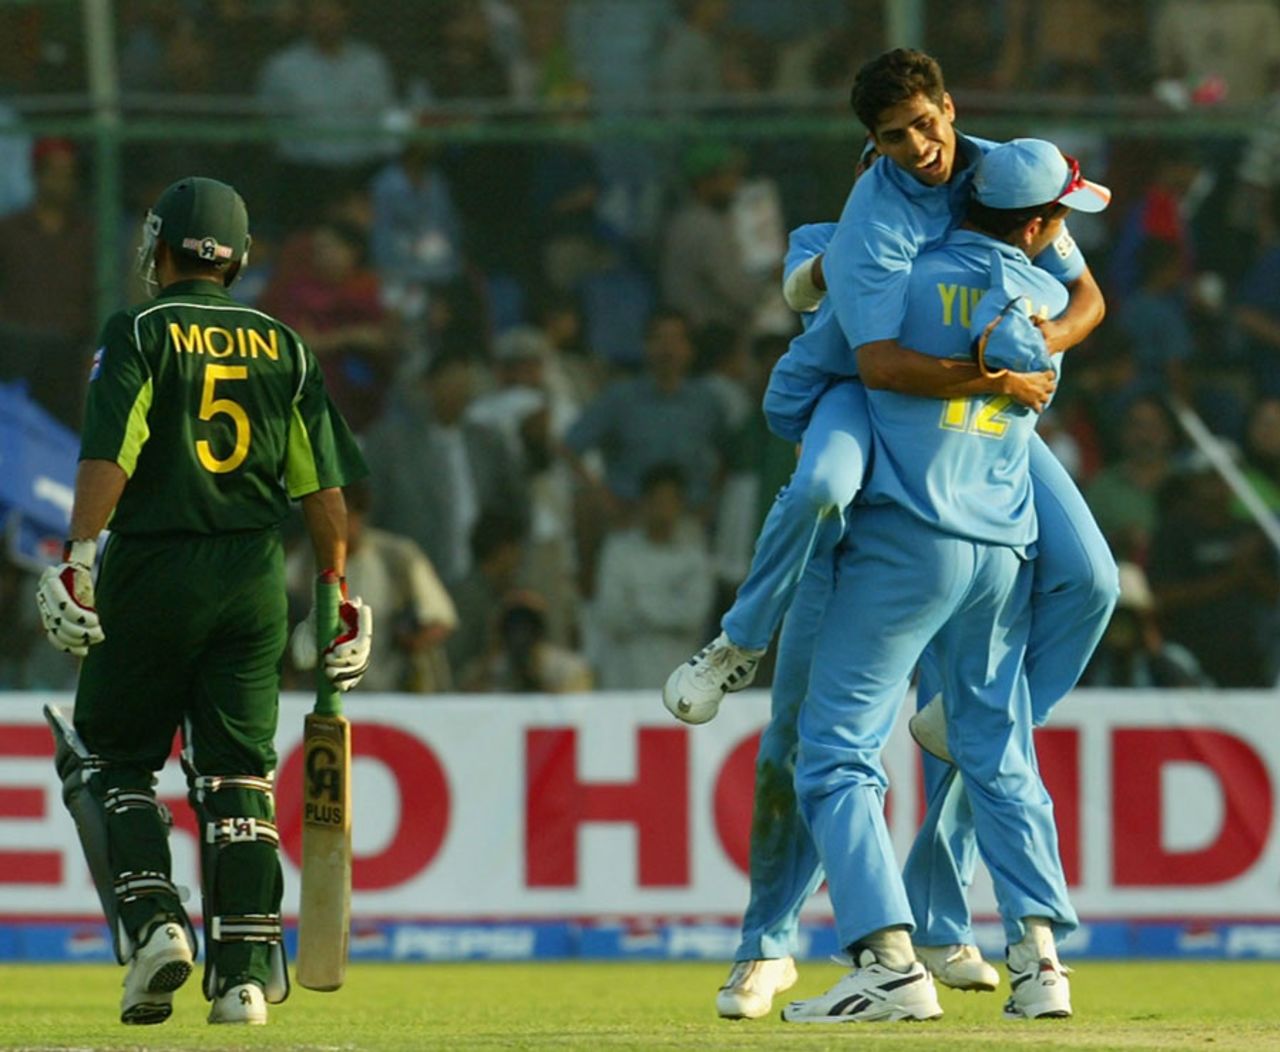 India celebrate as Moin Khan walking back after being dismissed, Pakistan v India, 1st ODI, Karachi, March 13, 2004